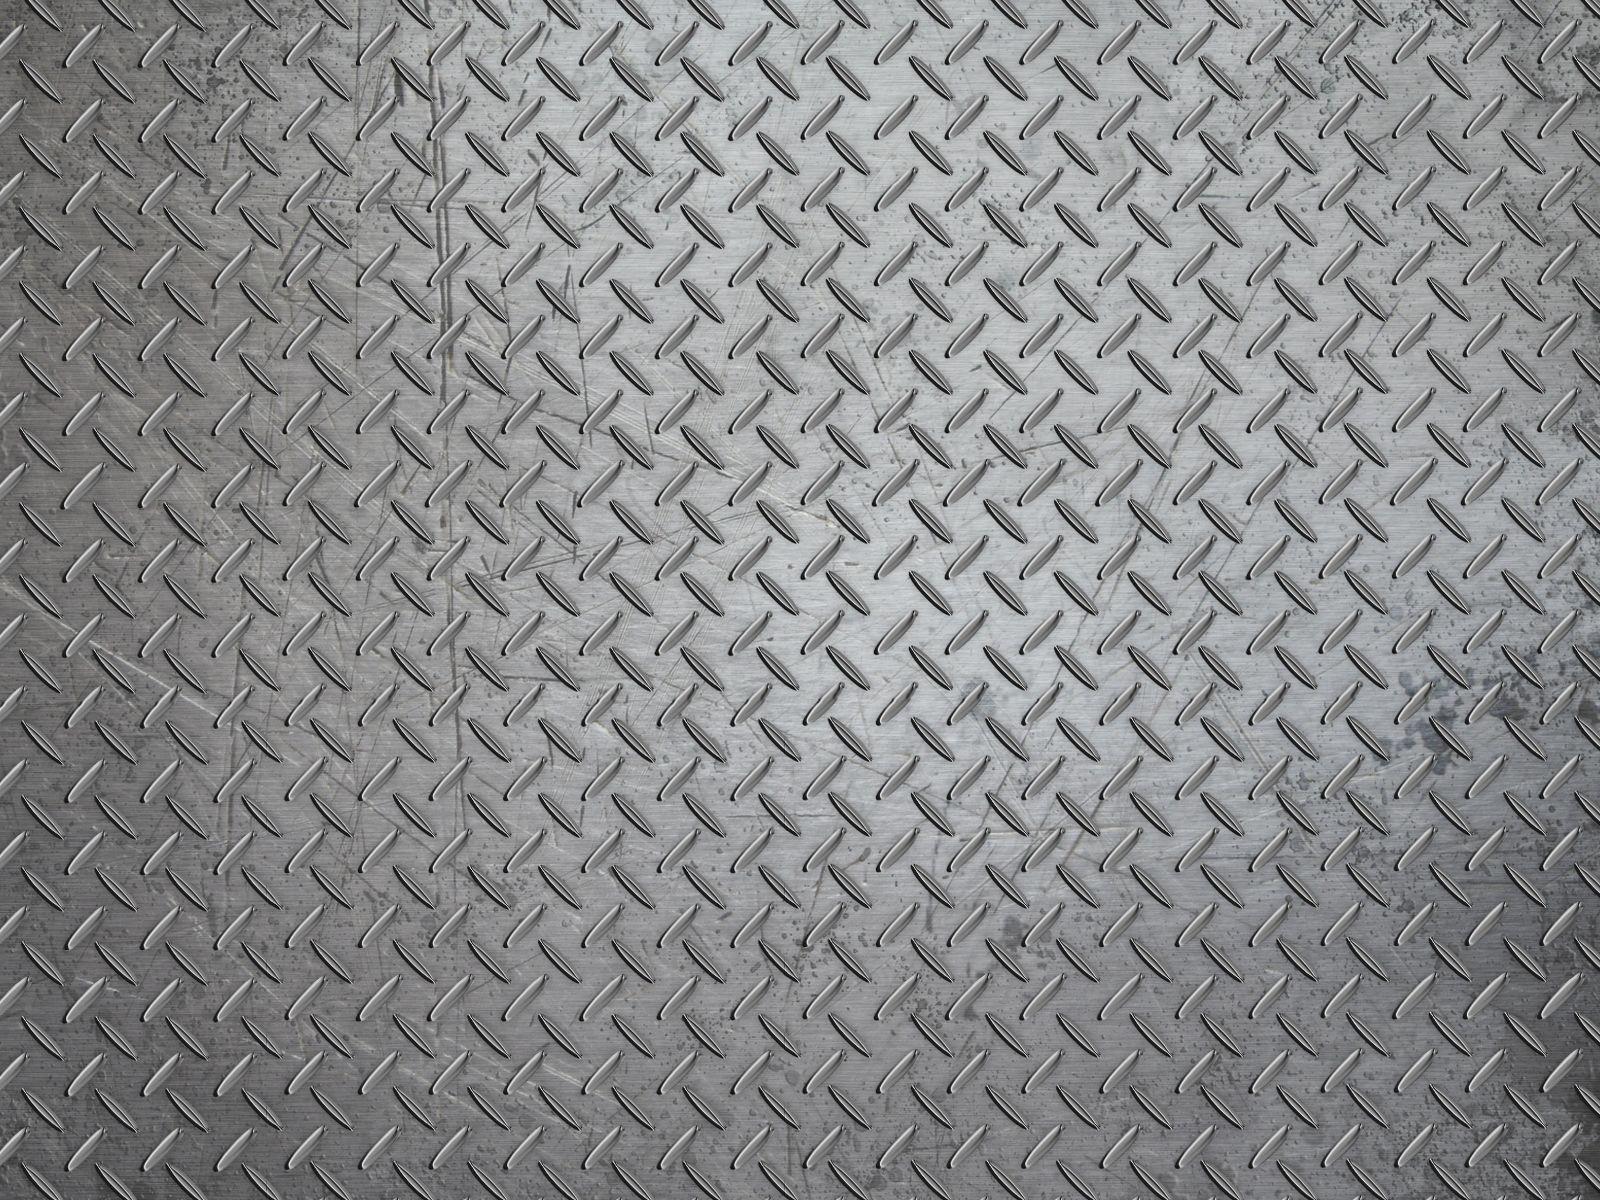 Steel Wallpaper, HD Image Steel Collection